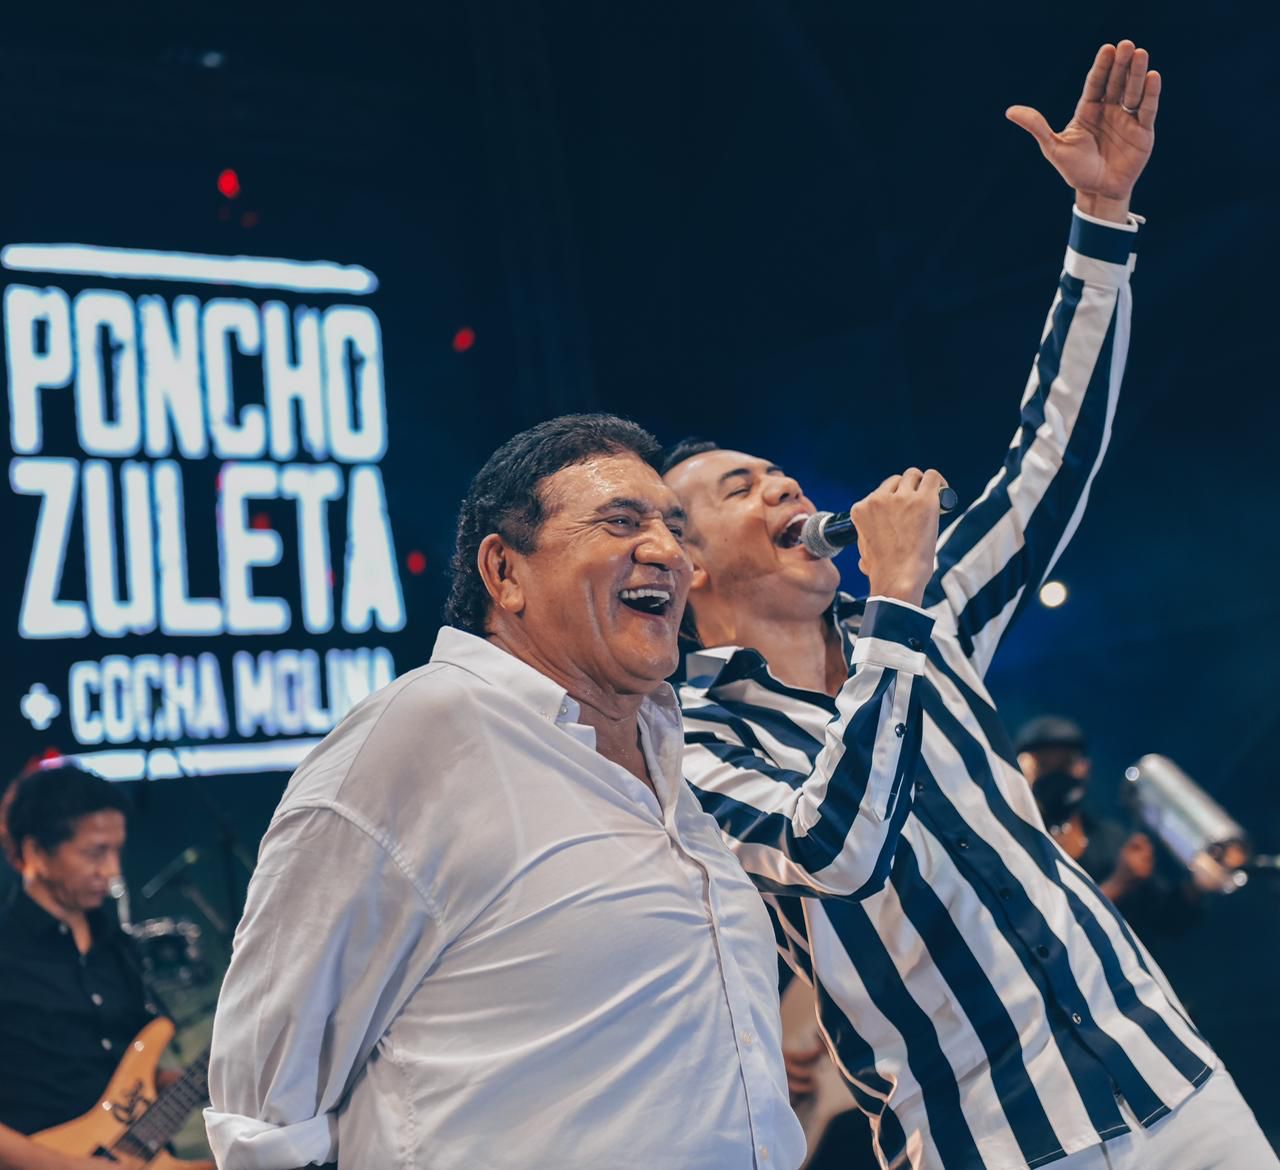 Diego Daza Y Poncho Zuleta